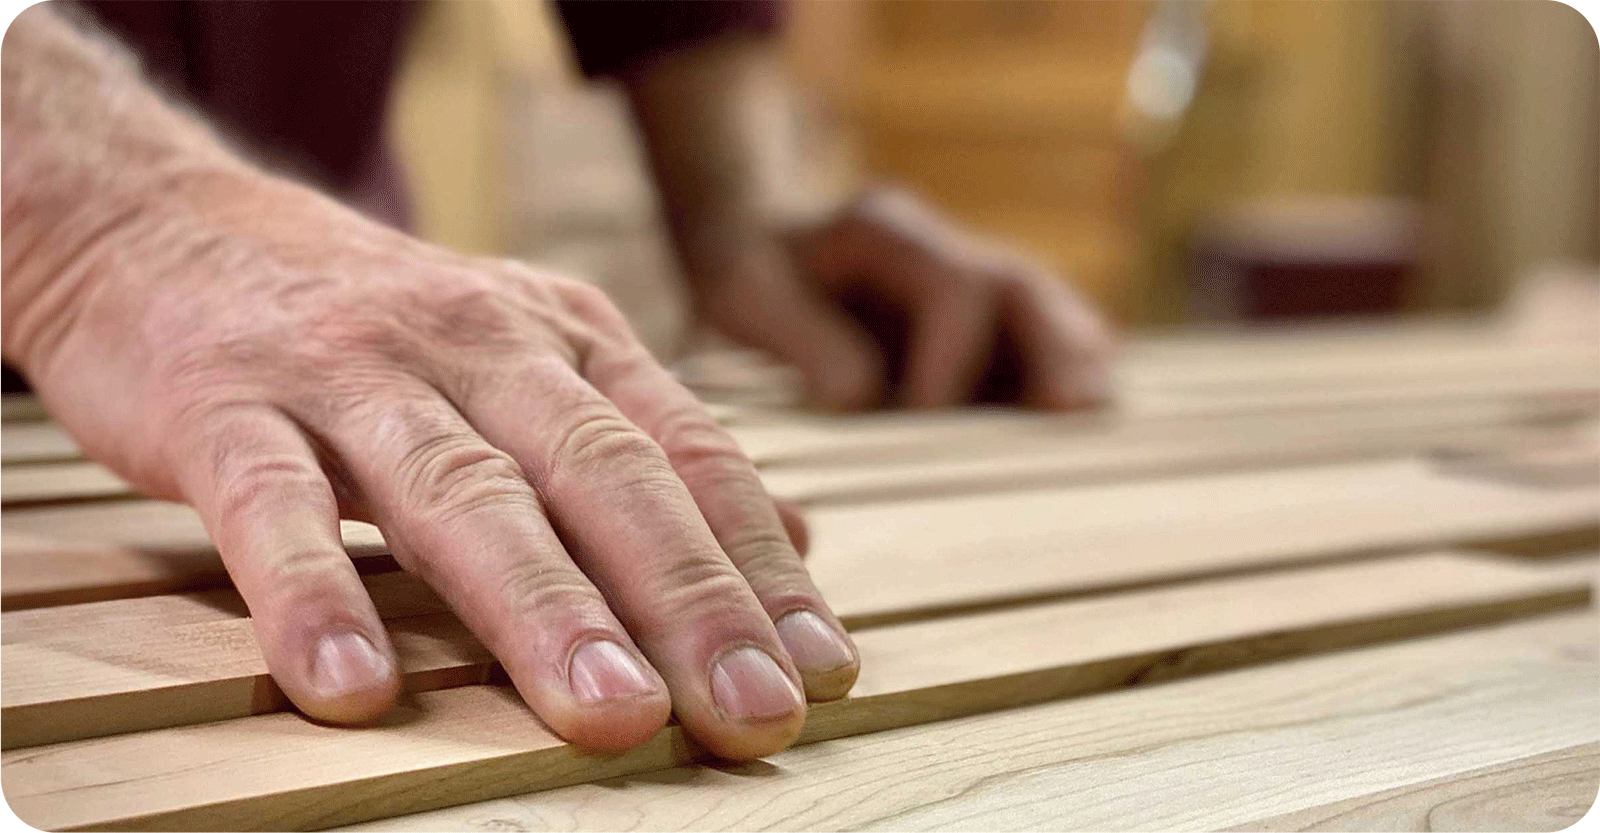 a man's hands building furniture